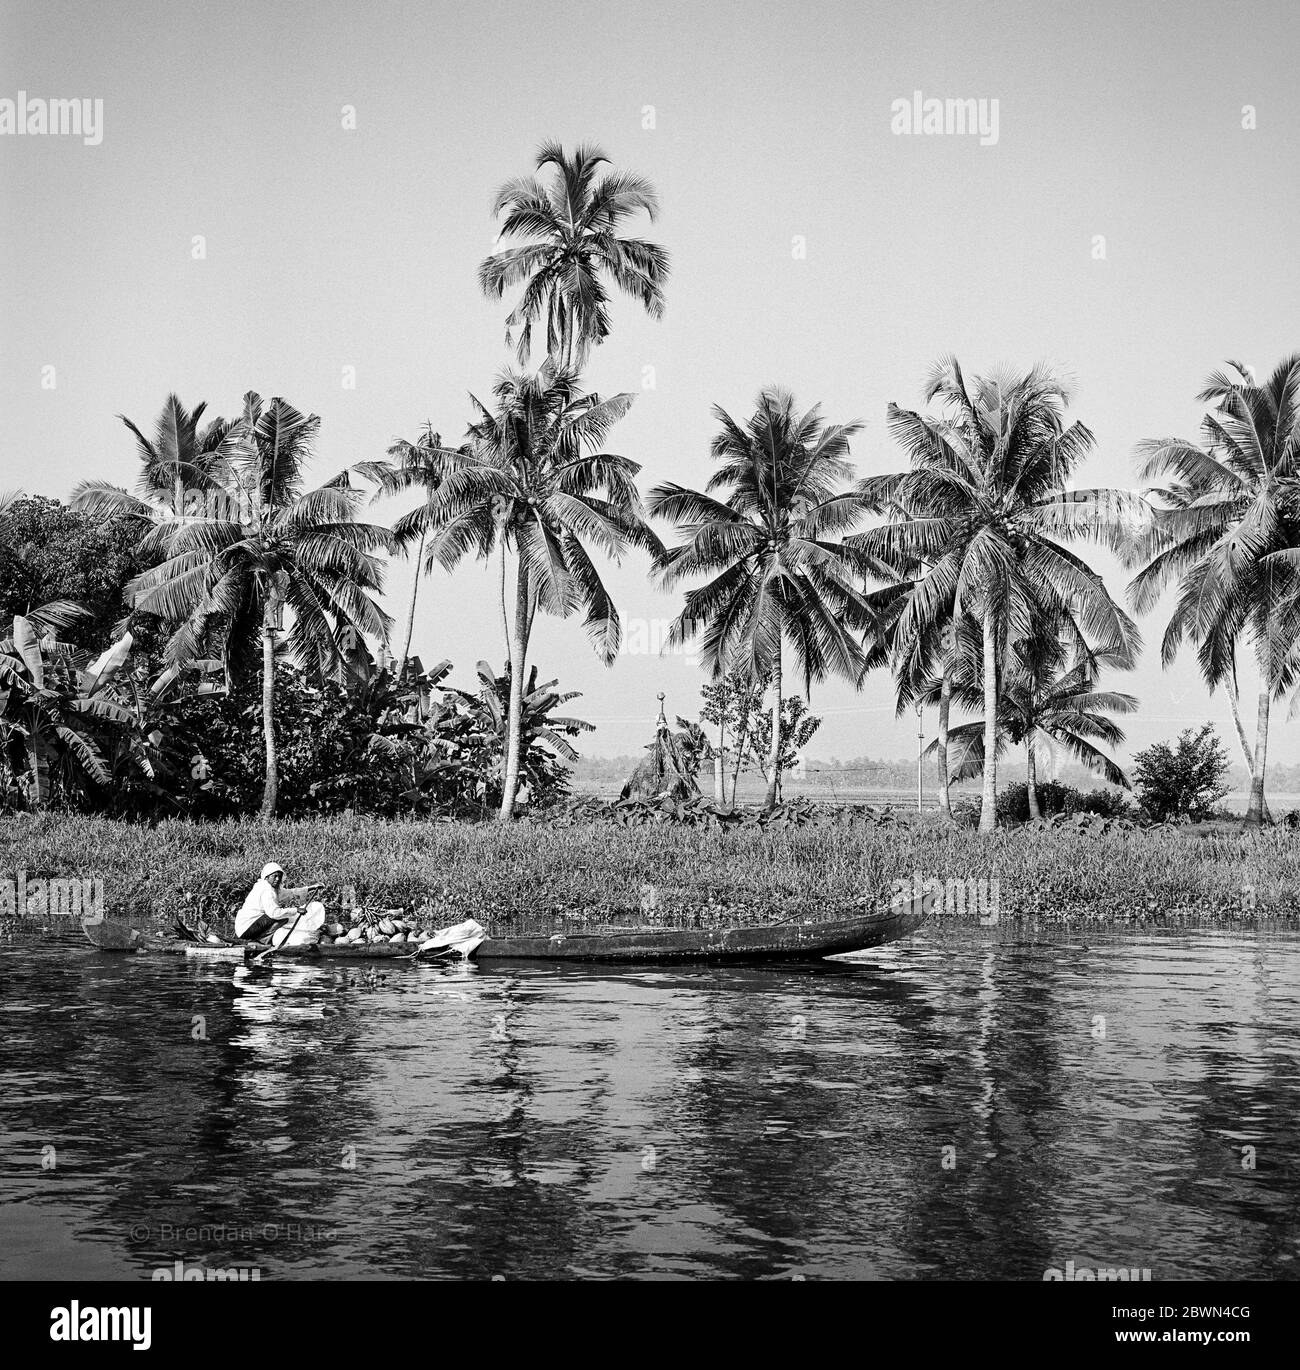 Woman paddles long narrow canoe loaded with coconuts along palmtree lined farmland in Kerala's backwaters. Stock Photo